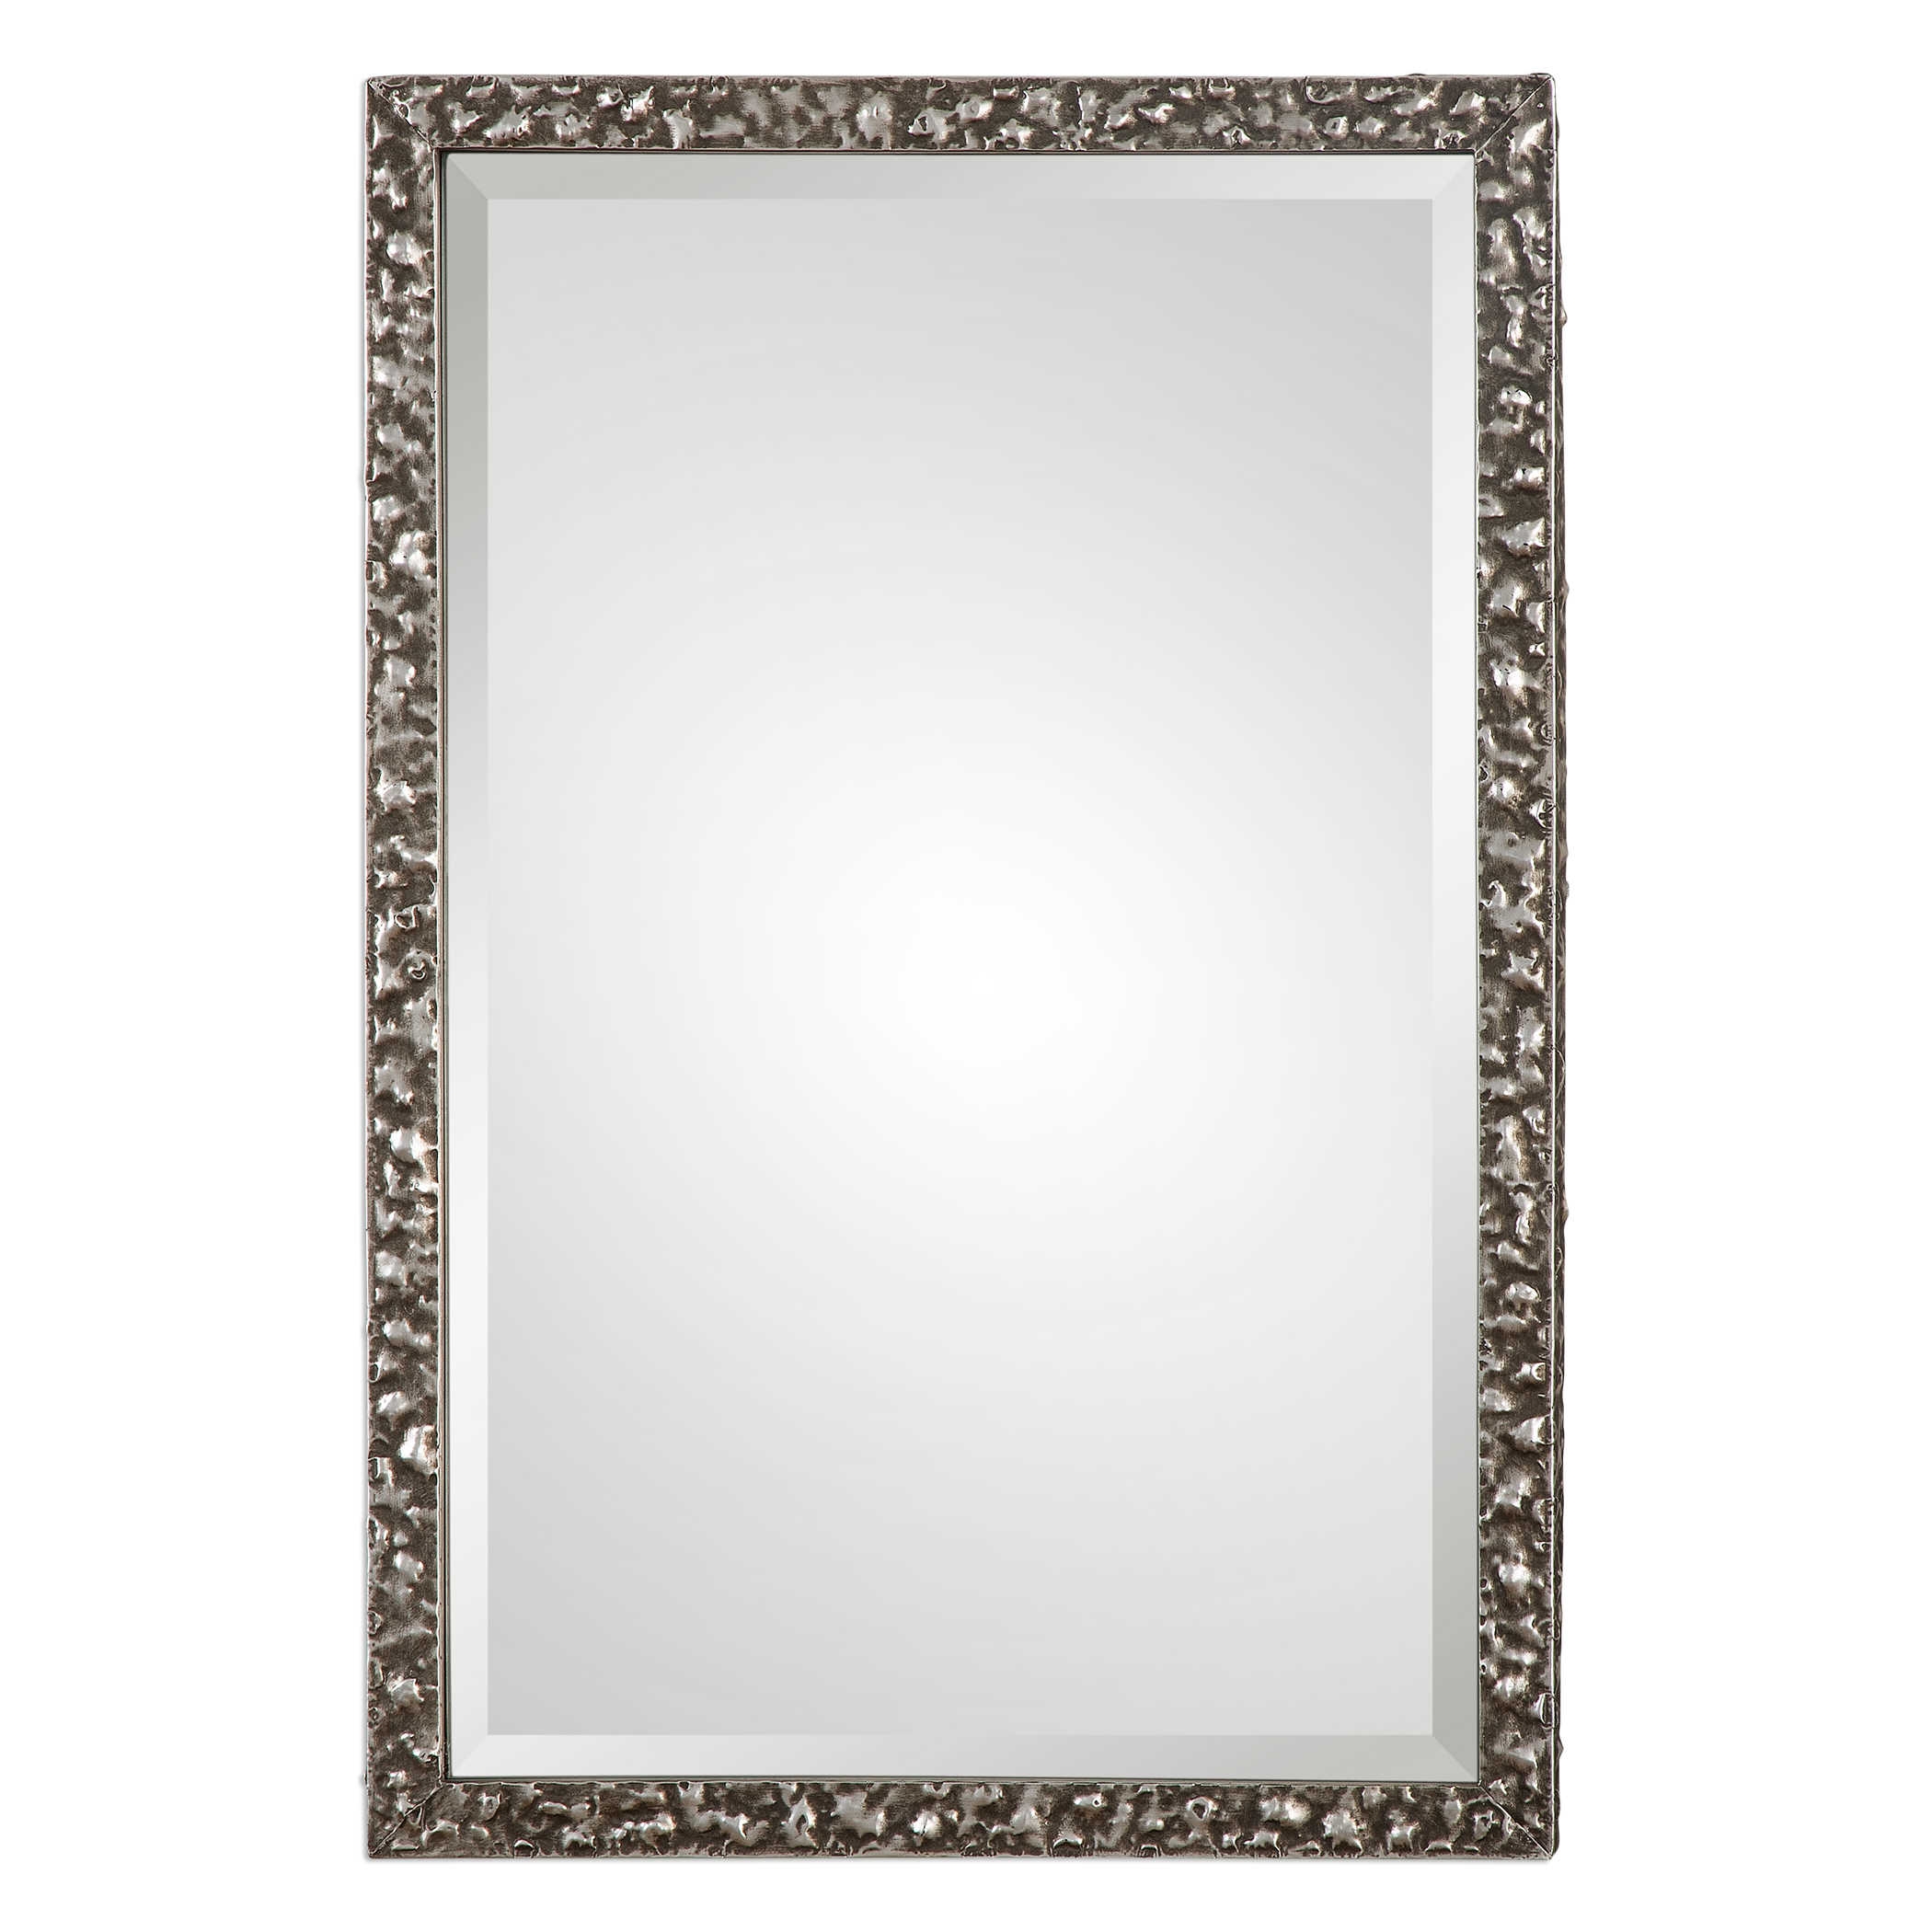 Alshon Mirror - Image 0